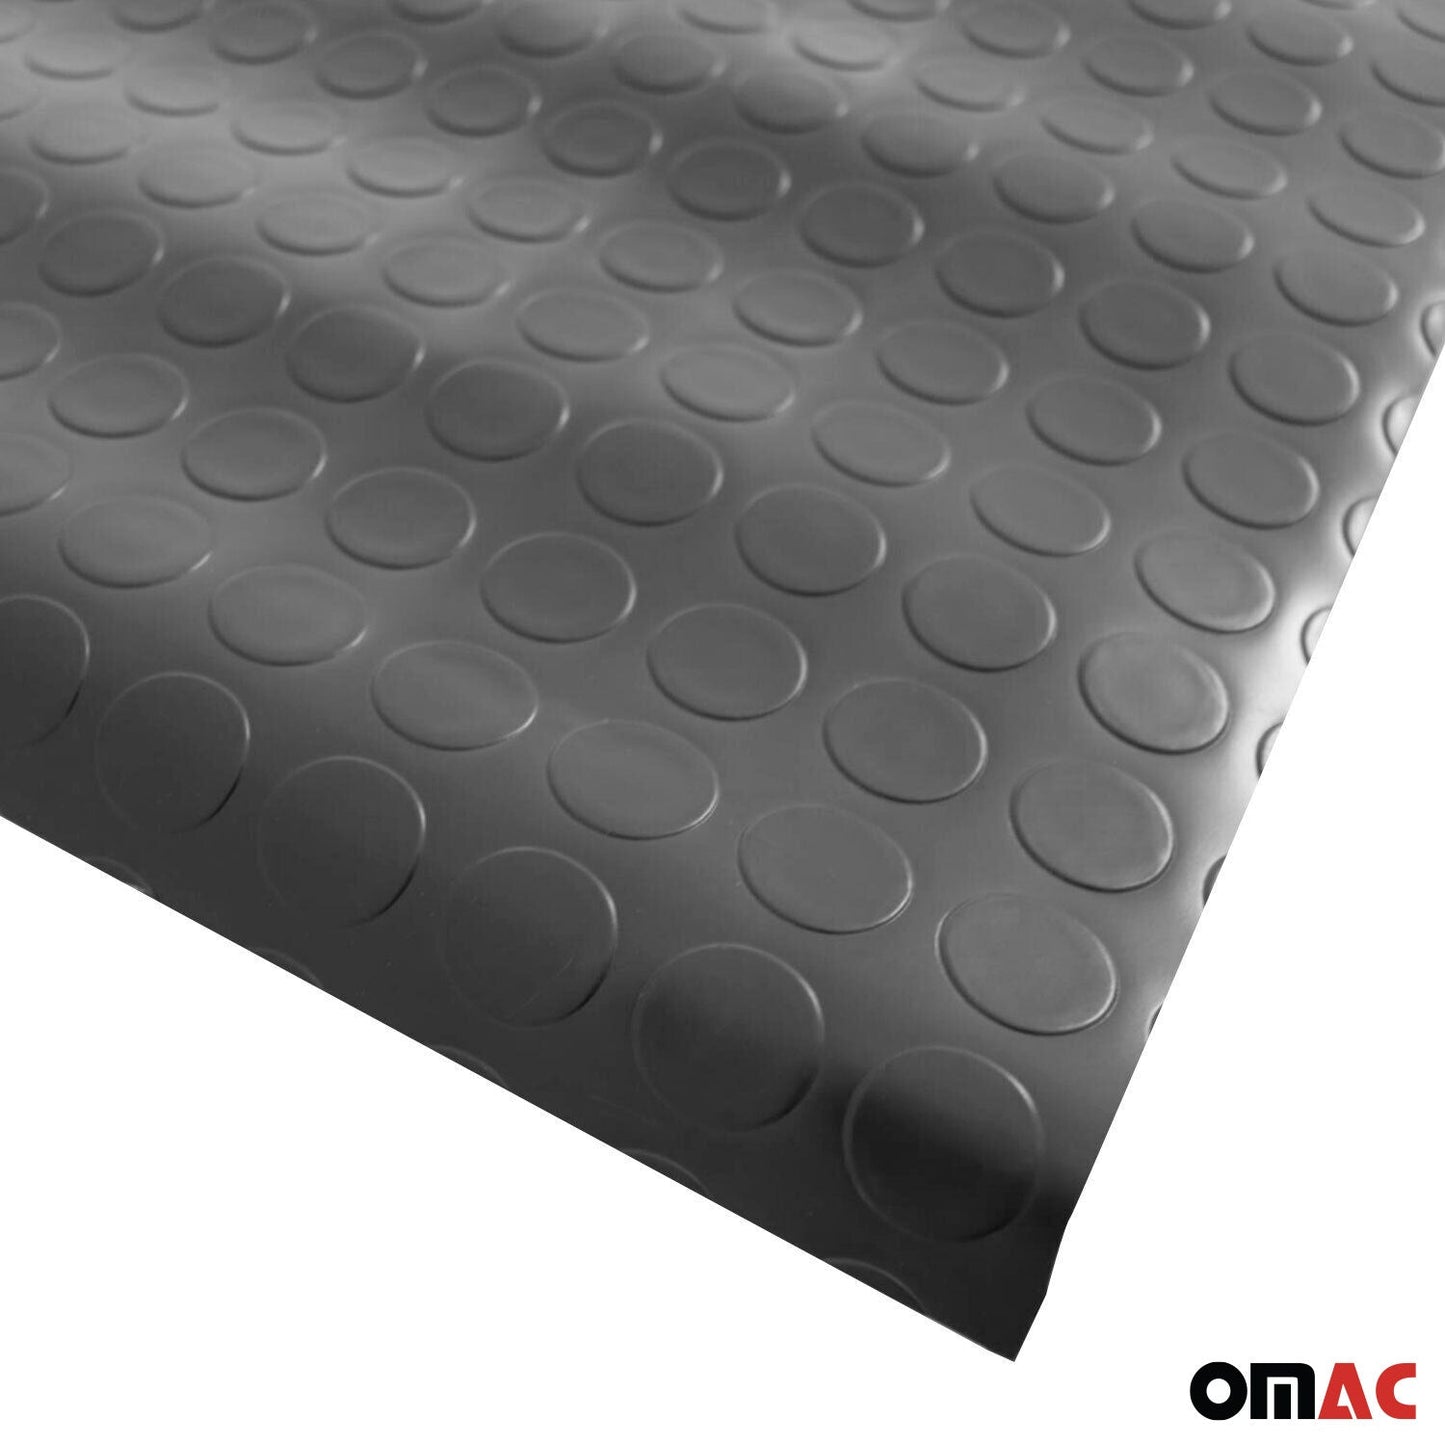 OMAC Rubber Trunk Mat Pickup Truck Bed Liner Trimmable Flooring Mat Black & Grey VRTG002425